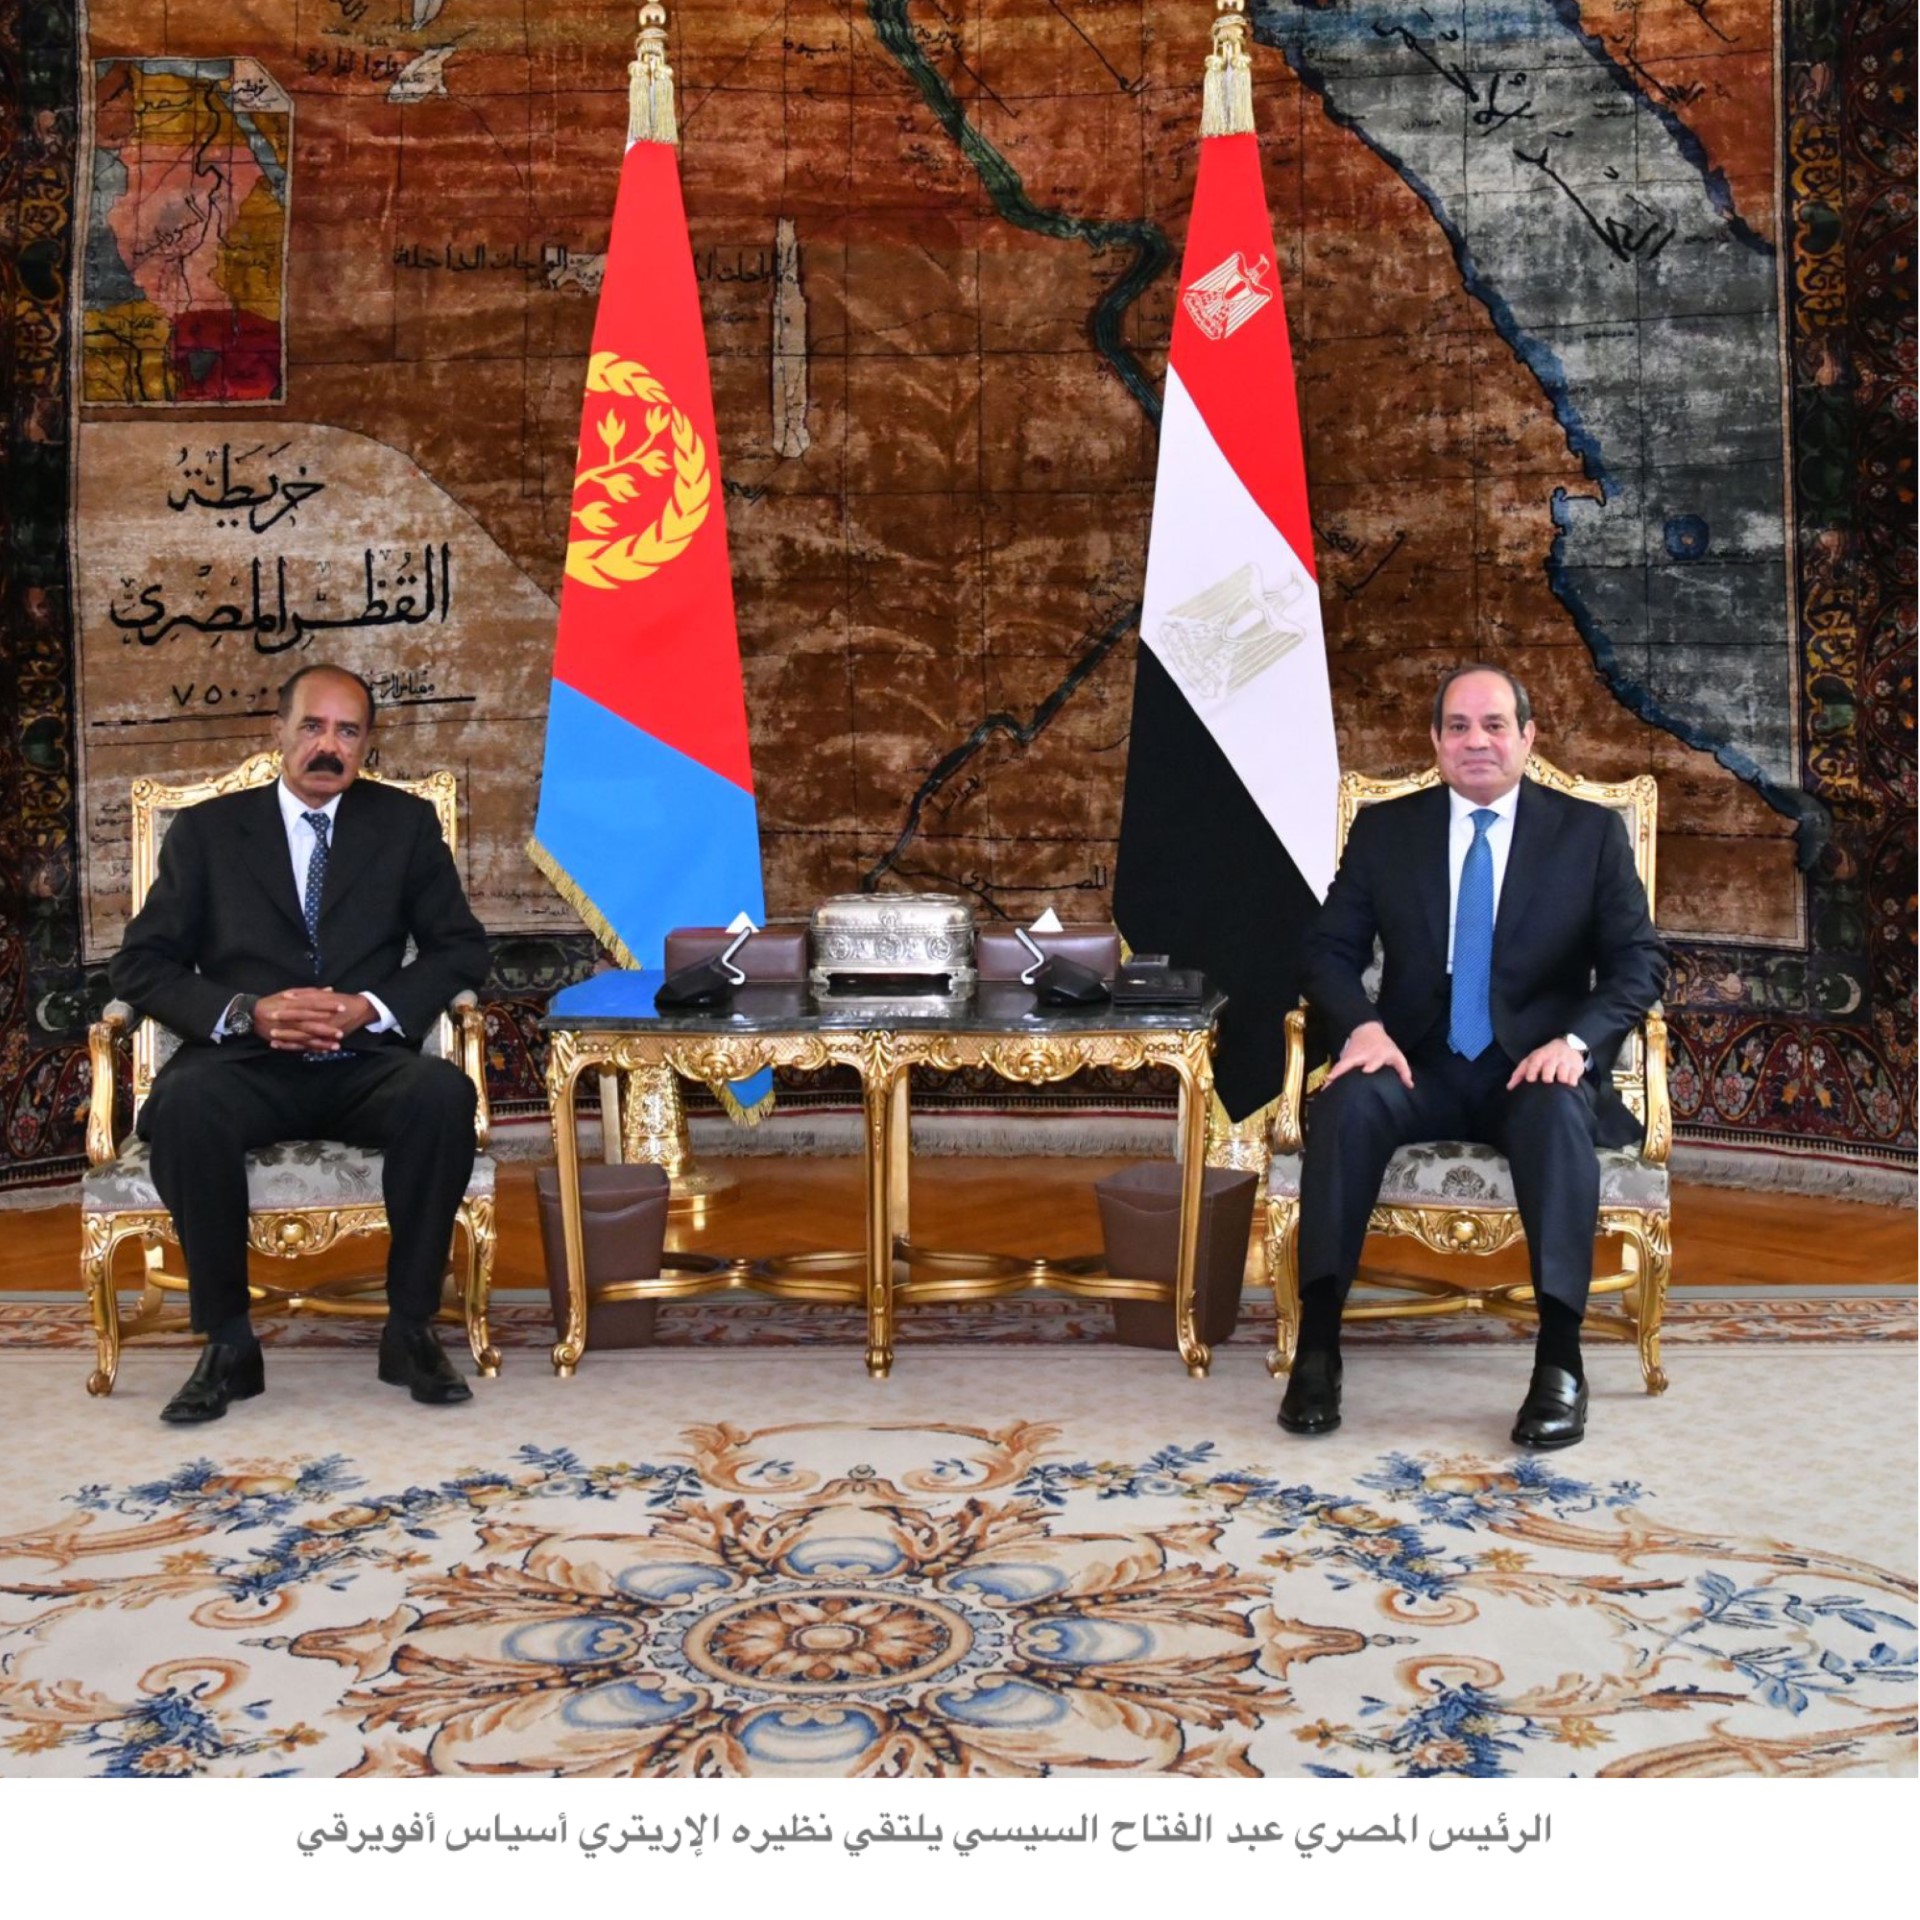 Egyptian President Abdelfattah Al-Sisi and his Eritrean counterpart Isaias Afwerki